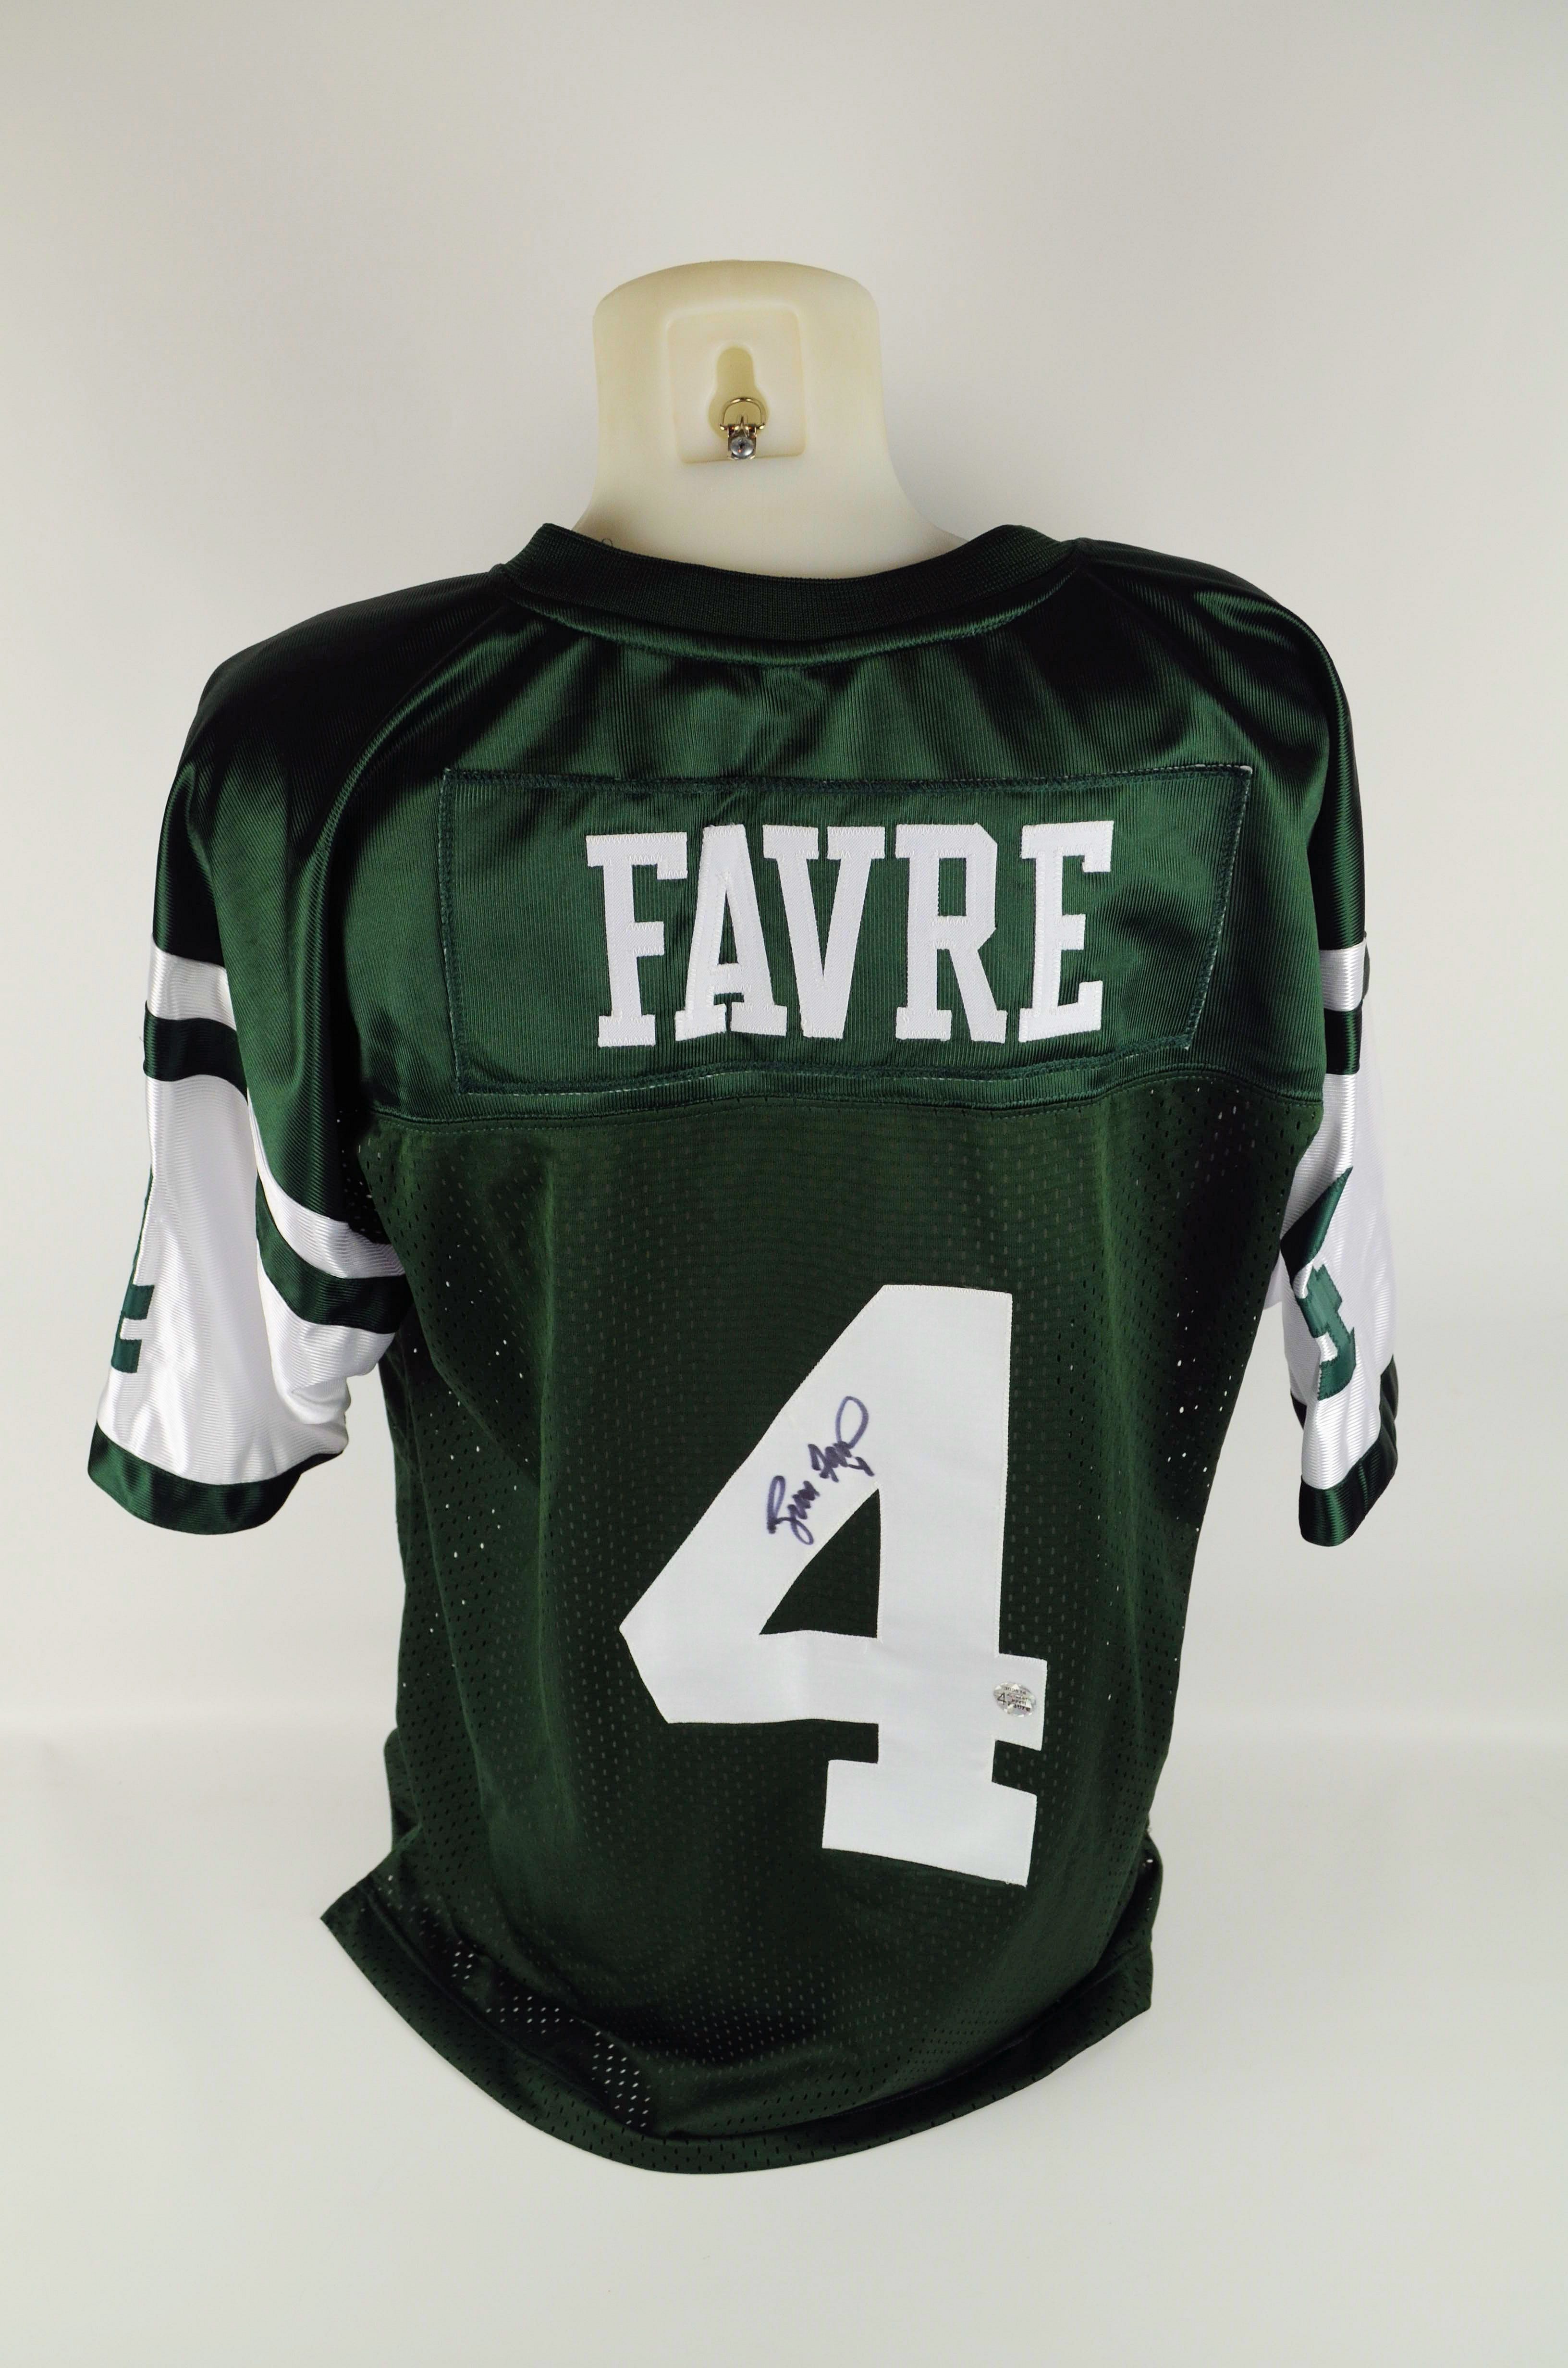 Brett Favre In Jets Uniform 92